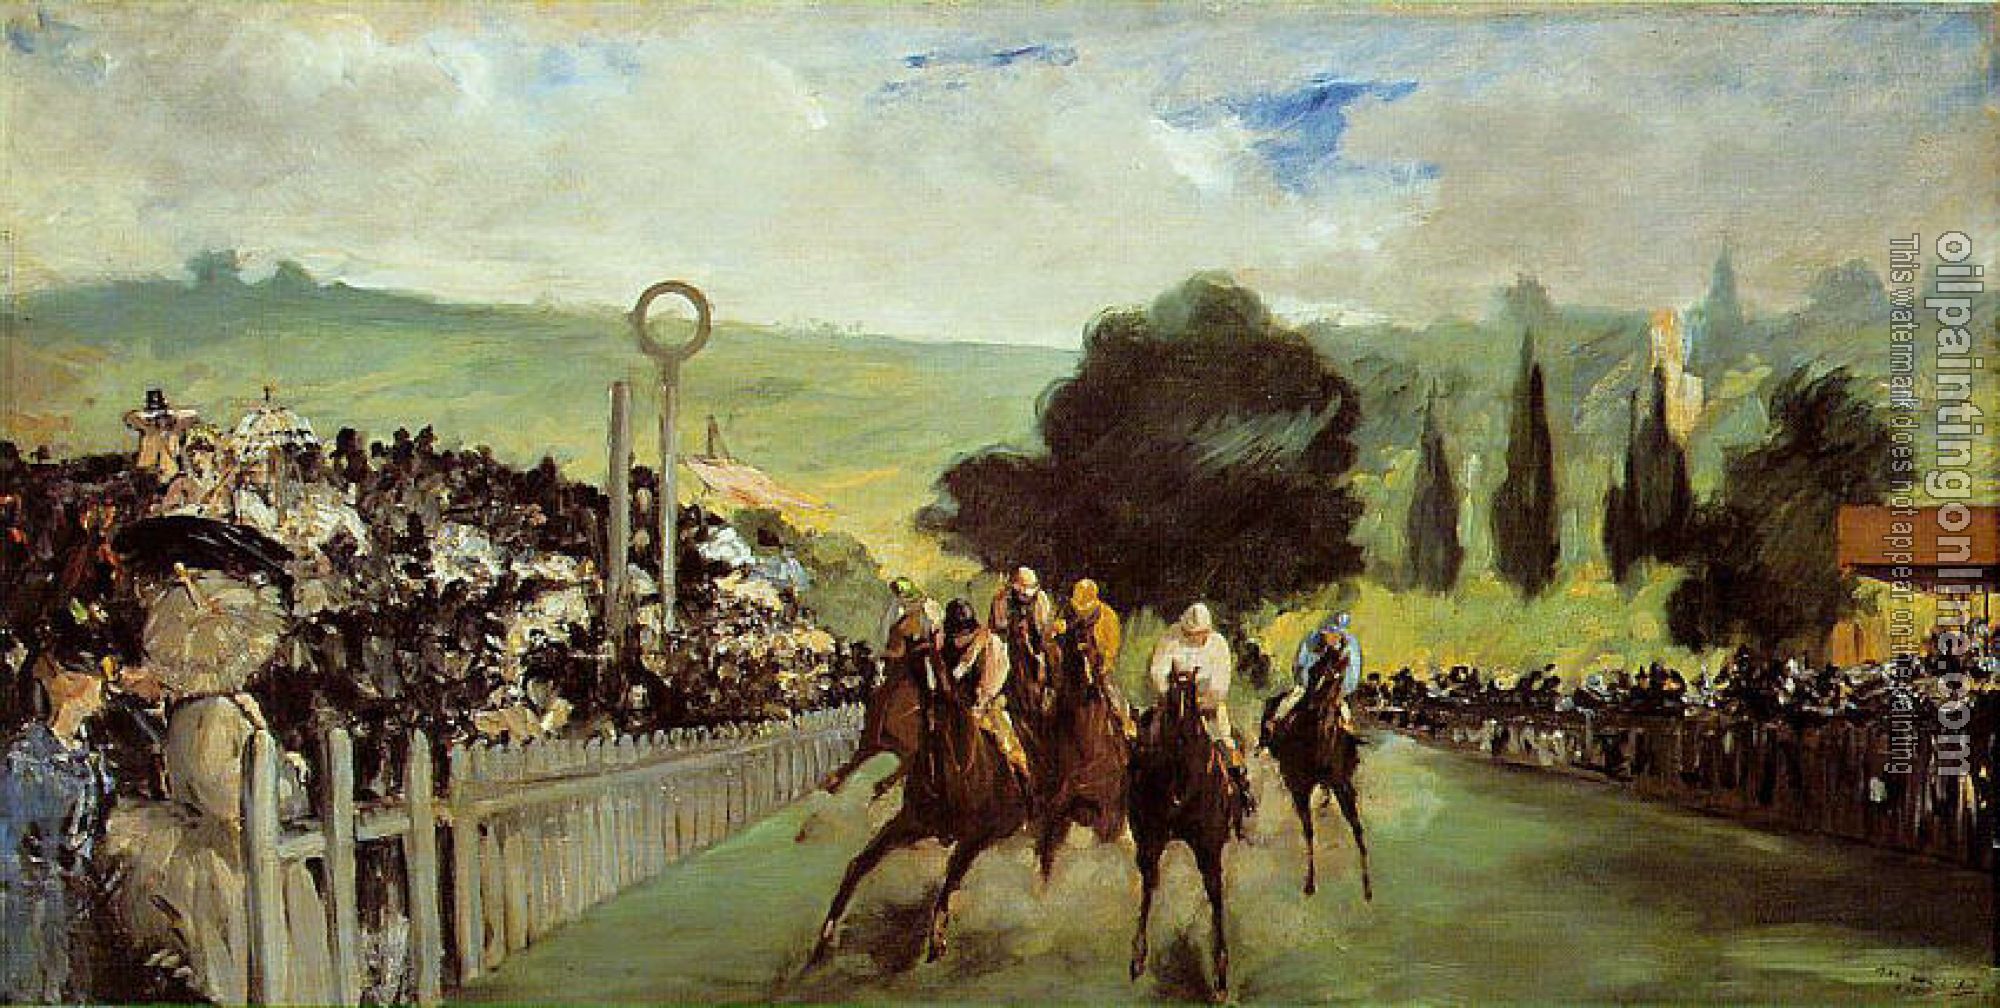 Manet, Edouard - Racetrack near Paris